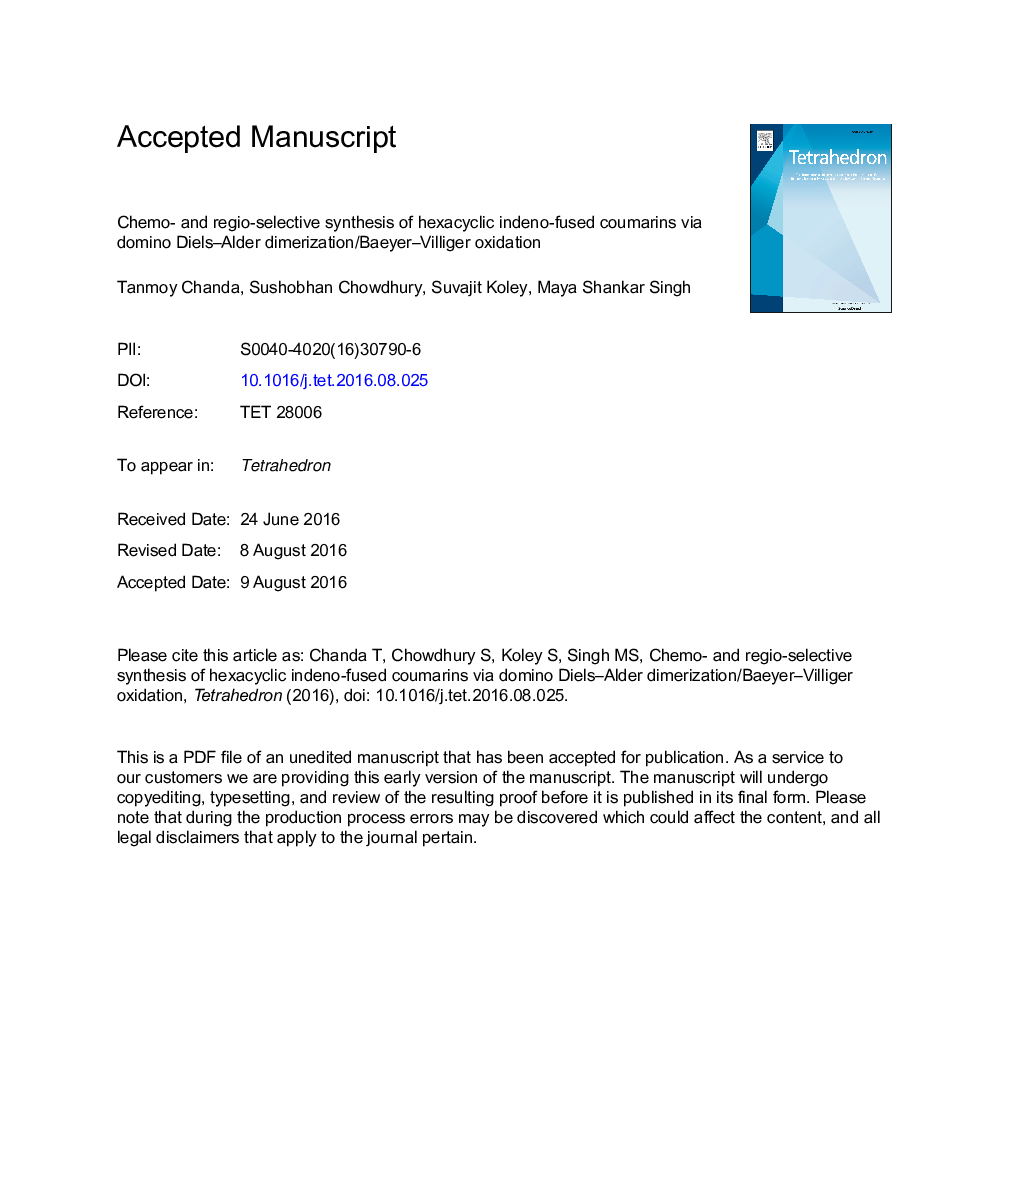 Chemo- and regio-selective synthesis of hexacyclic indeno-fused coumarins via domino Diels-Alder dimerization/Baeyer-Villiger oxidation